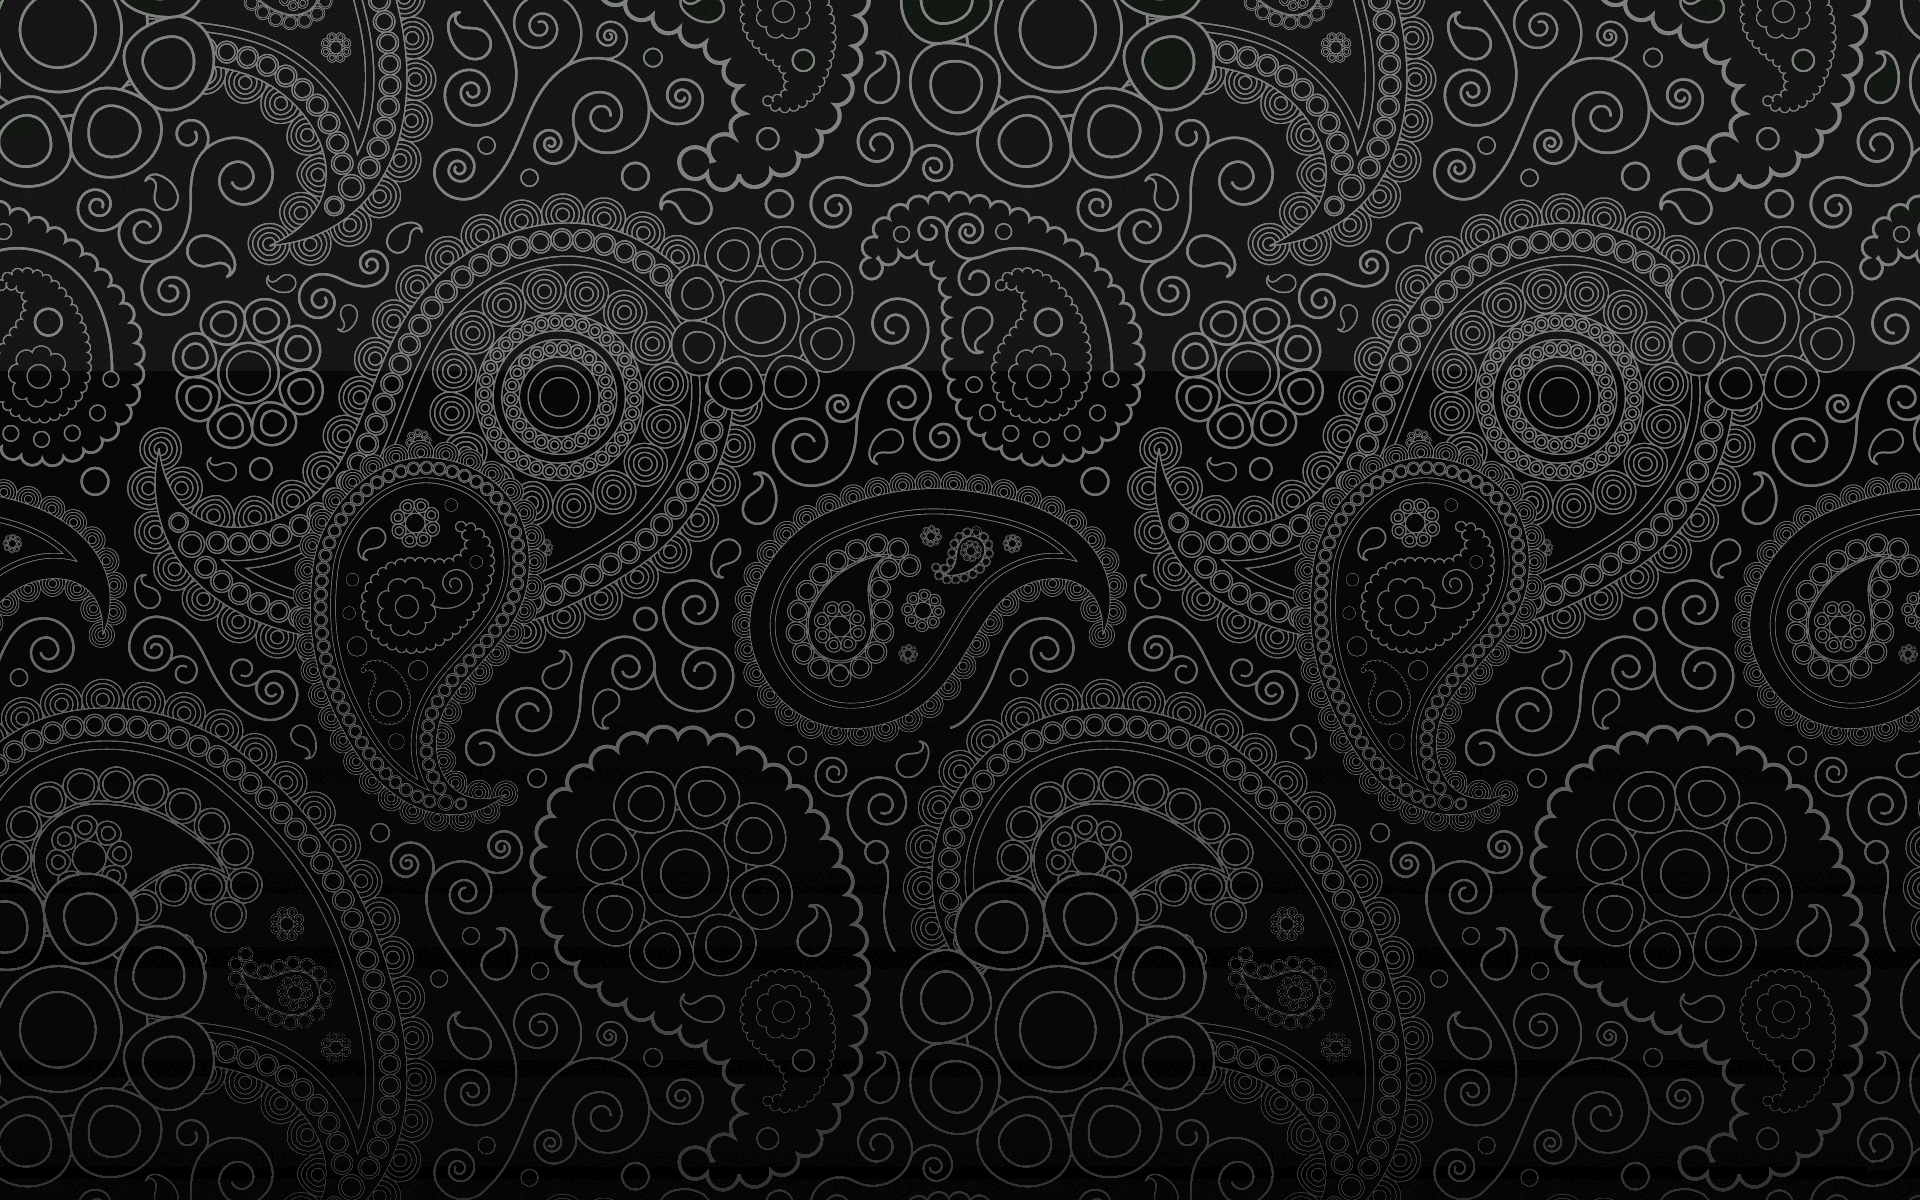 Plain Black Background Iphone High Quality - Black Wallpaper HD